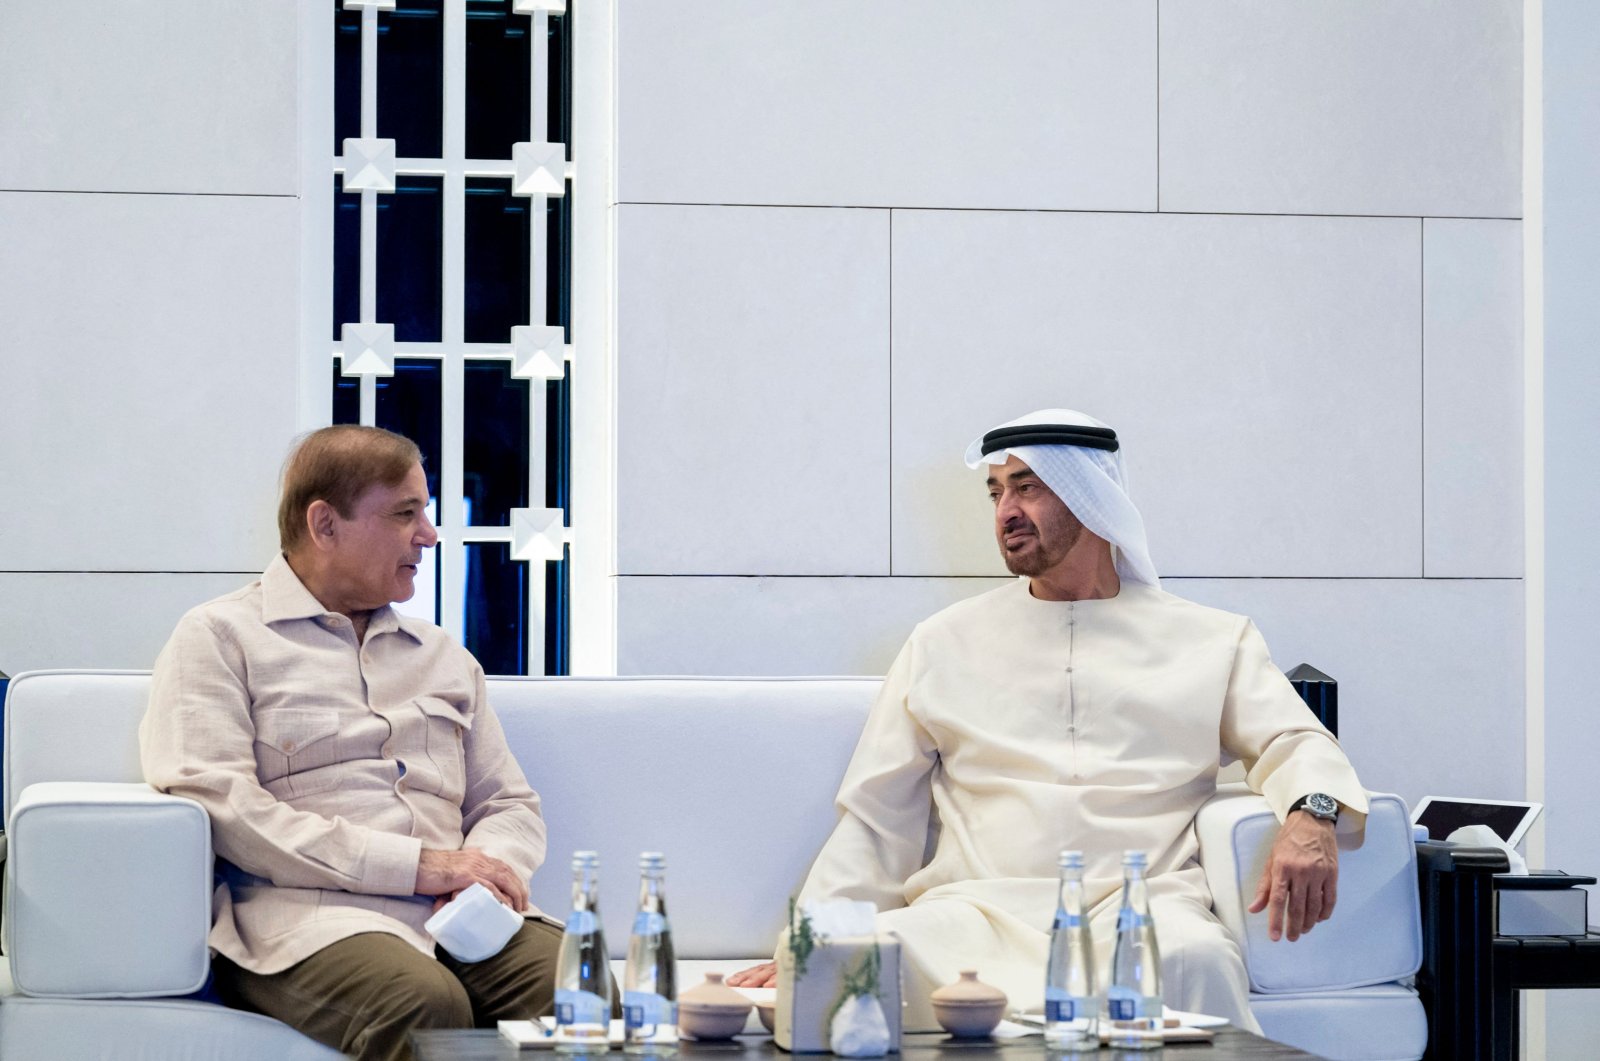 Pakistan Prime Minister Shahbaz Sharif (L) and Abu Dhabi Crown Prince Sheikh Mohammed bin Zayed Al Nahyan meet in Abu Dhabi, UAE, April 30, 2022. (UAE Ministry of Presidential Affairs Handout via AFP)